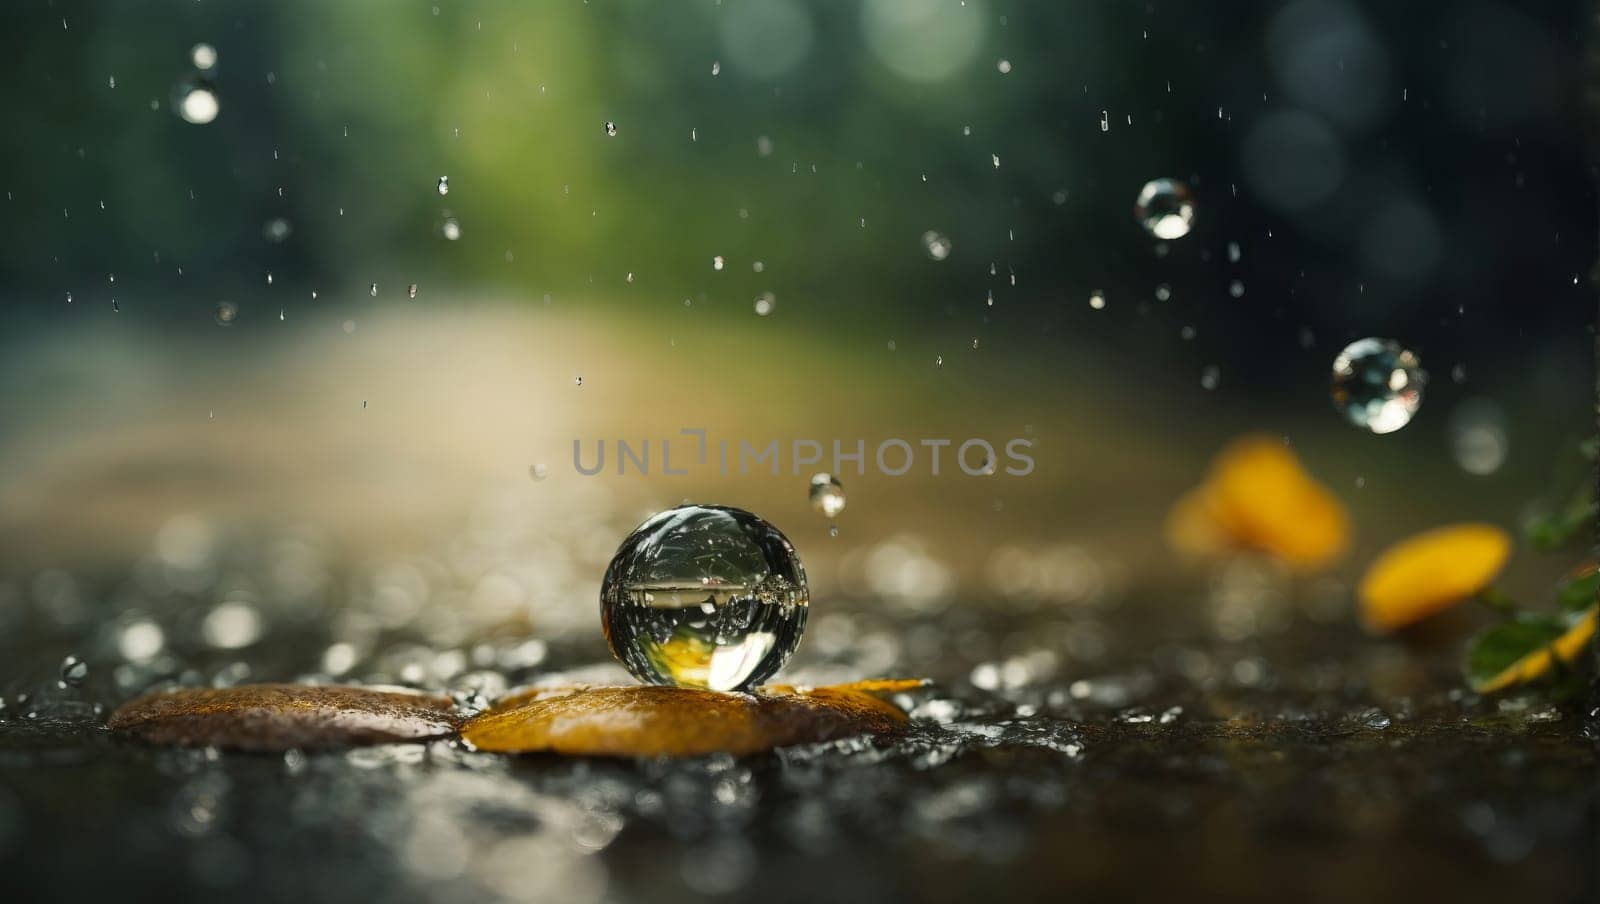 Photograph of falling raindrops. AI generated